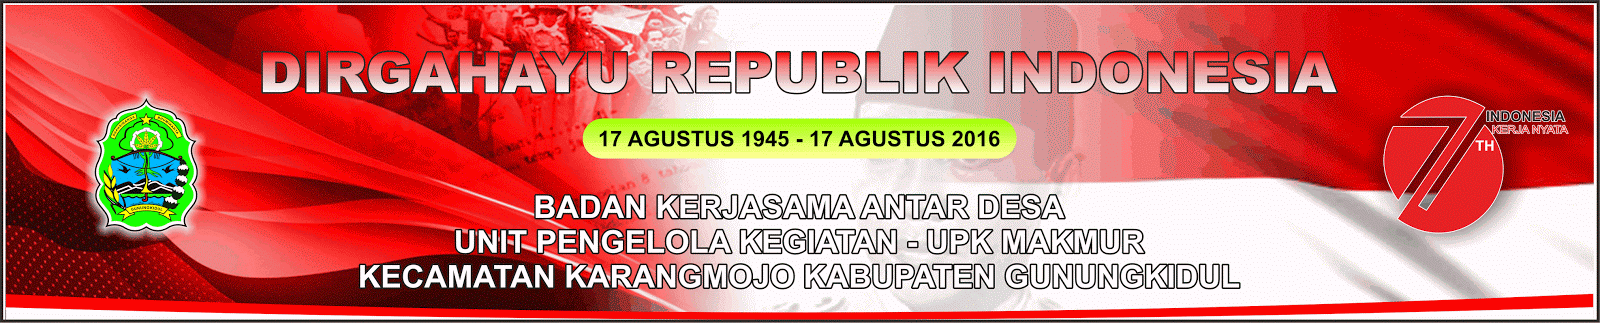 DIRGAHAYU REPUBLIK INDONESIA 71 TH 2016